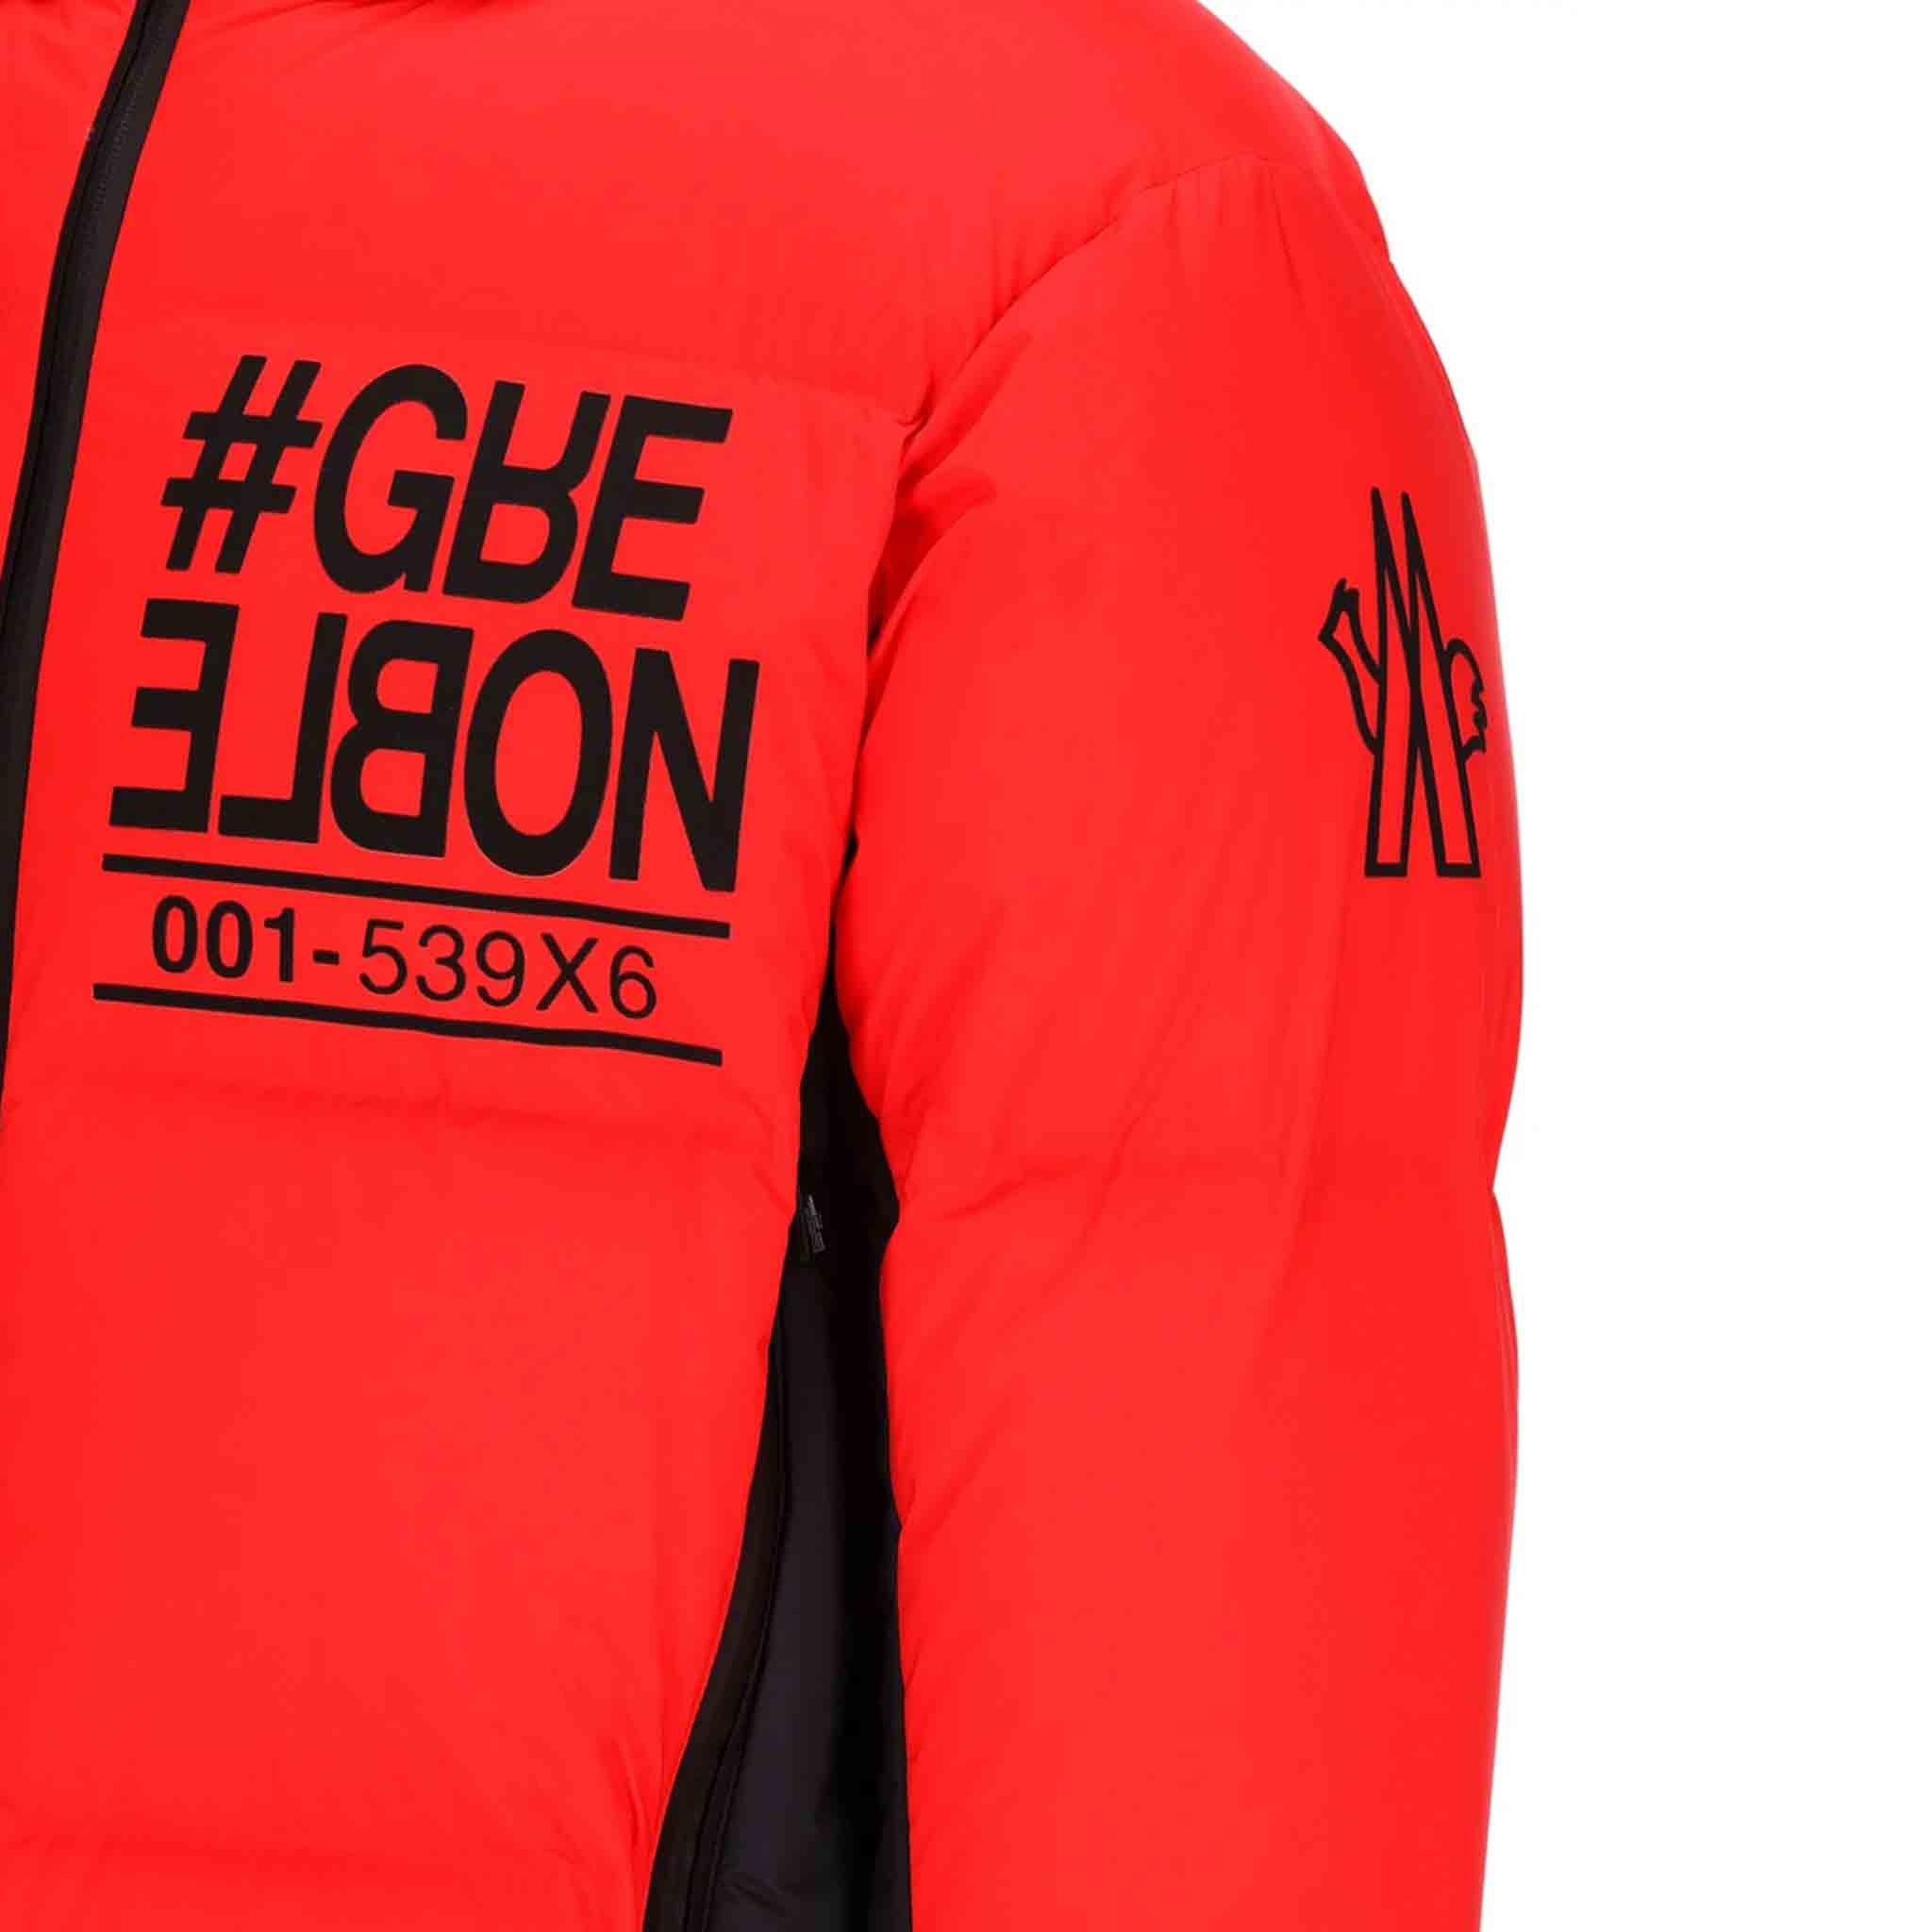 Moncler Grenoble Men's Pramint Jacket in Red